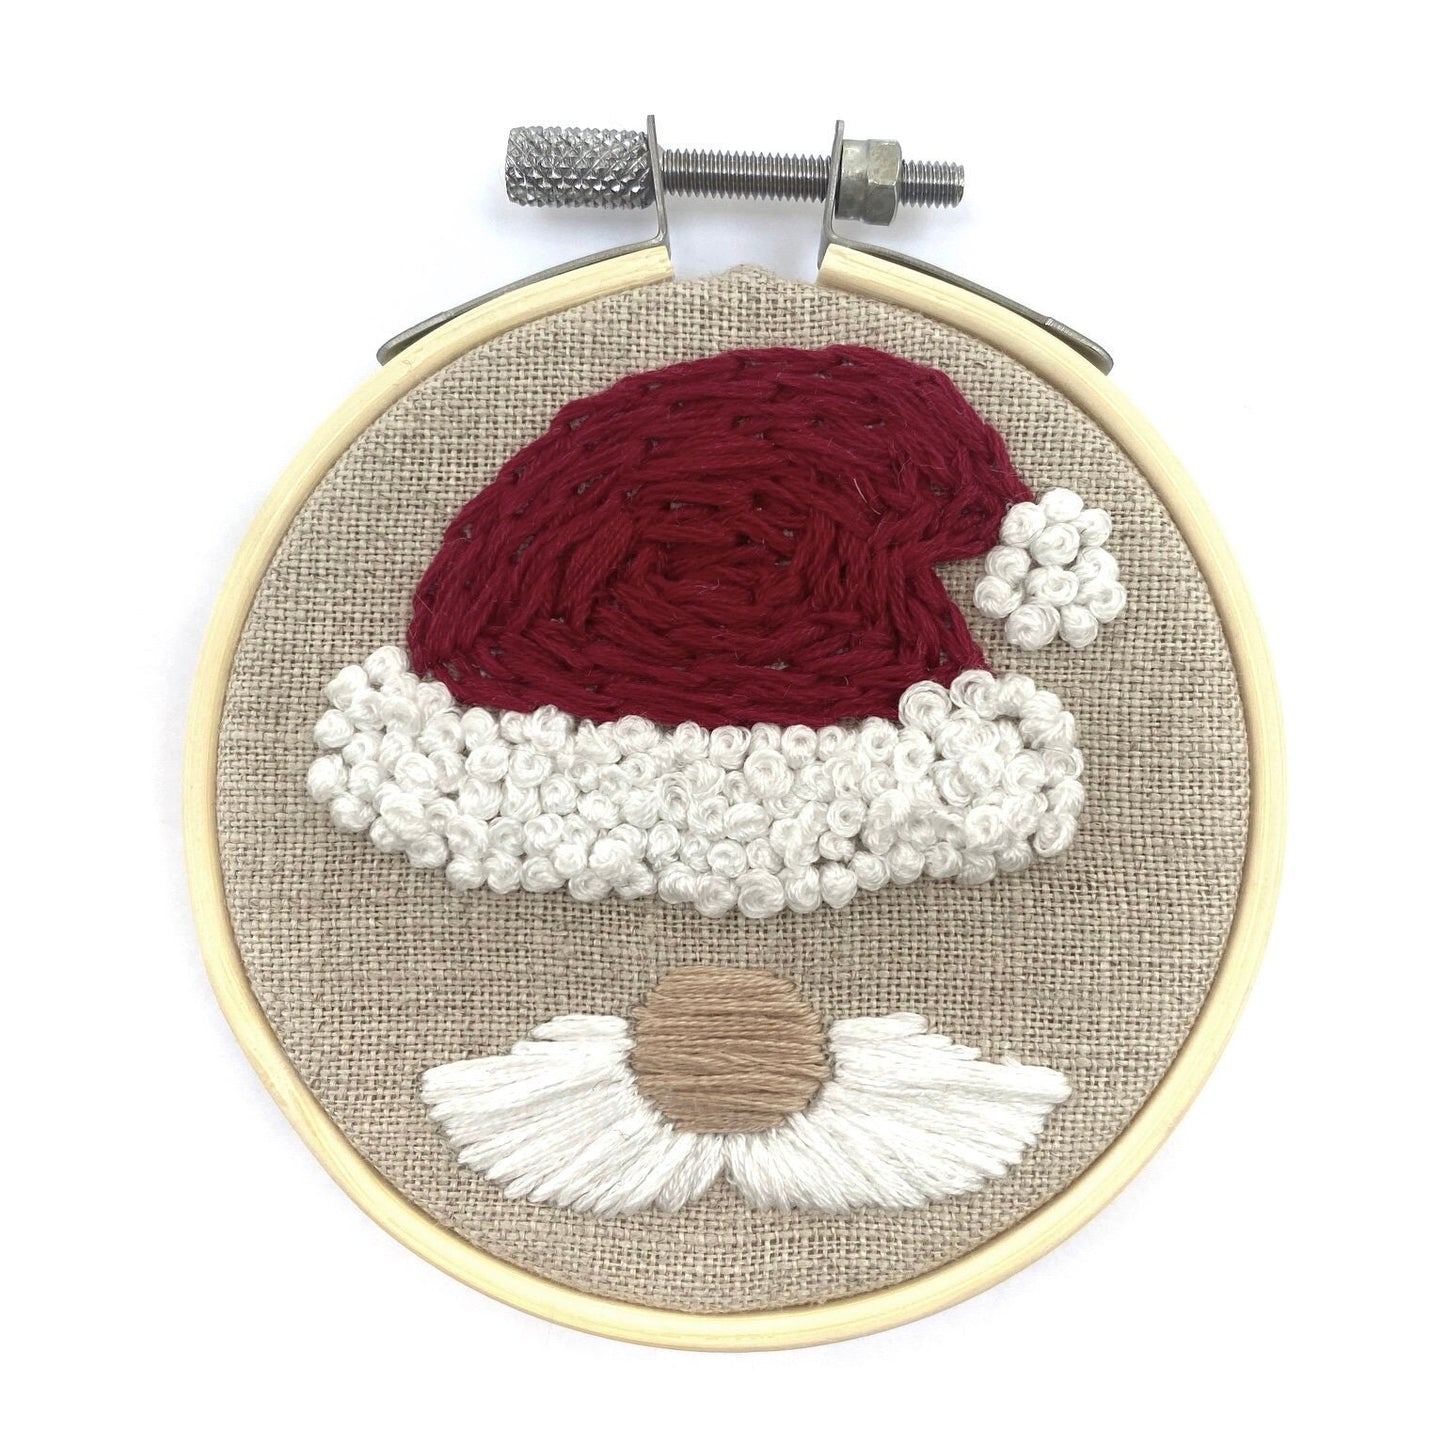 Santa Christmas Ornament PDF Embroidery Pattern